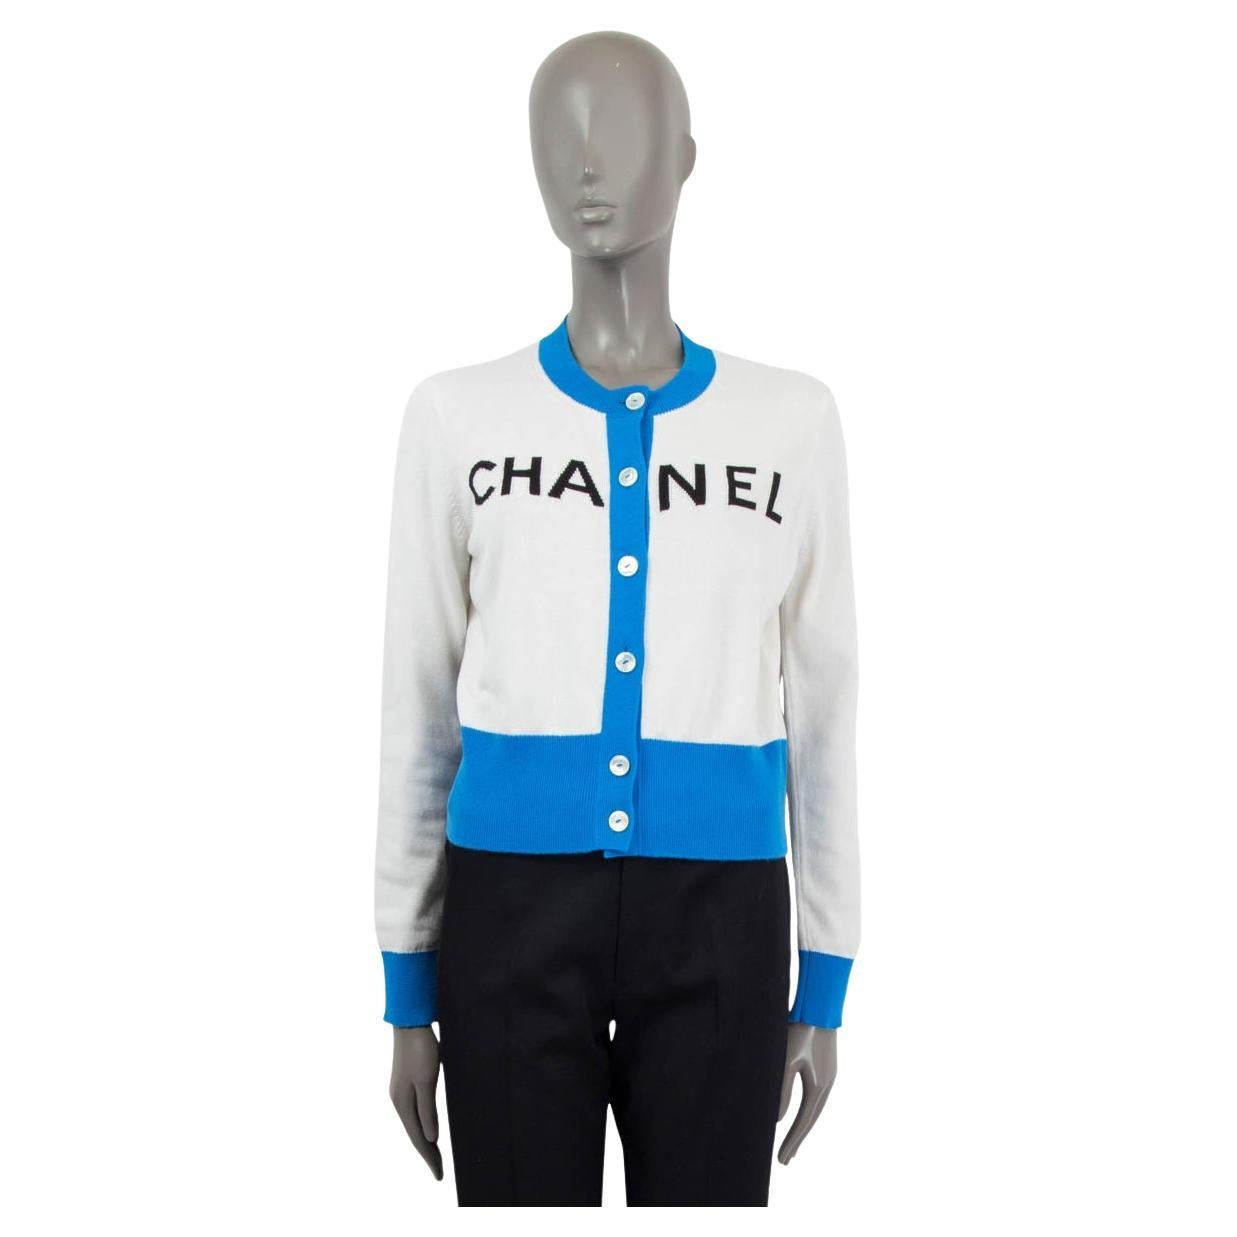 CHANEL white & blue cashmere 2019 19S ICONIC LOGO Cardigan Sweater 38 S